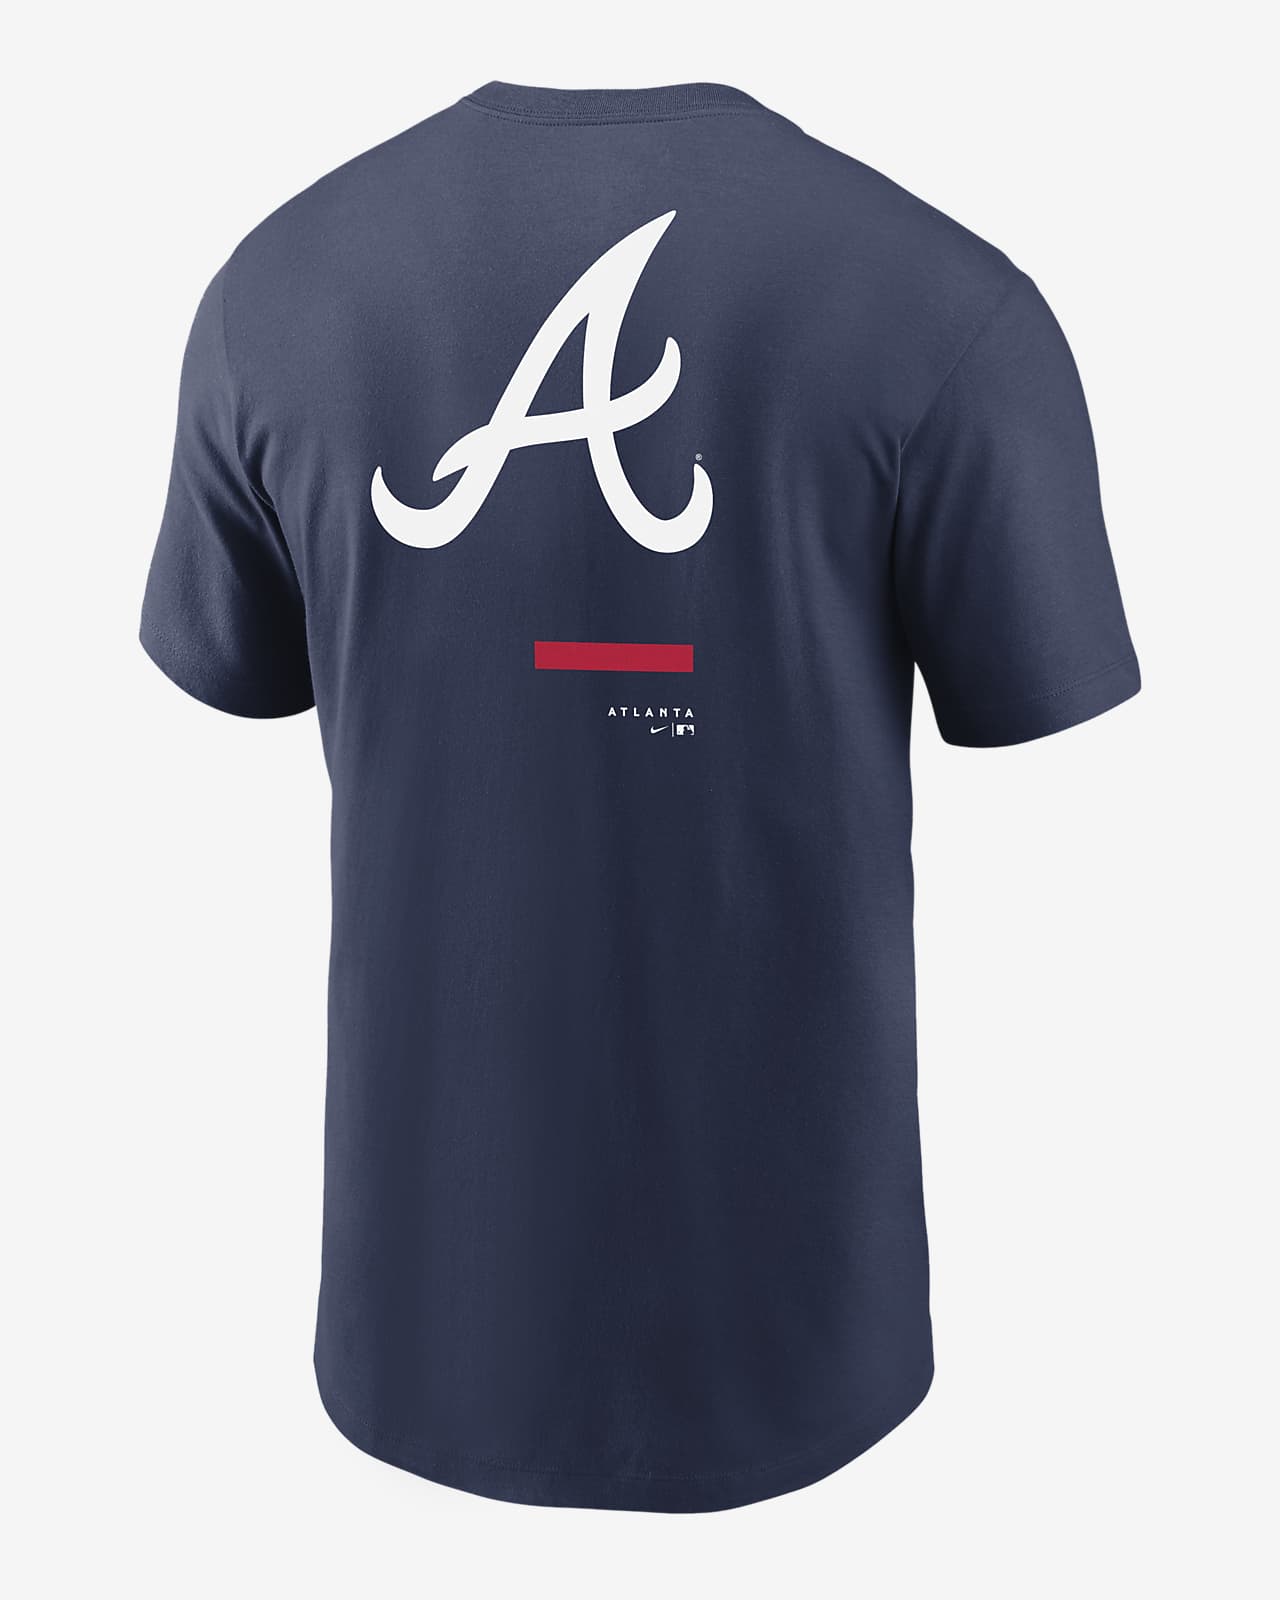 Nike Men's Atlanta Braves Team Engineered T-Shirt - Navy - S Each